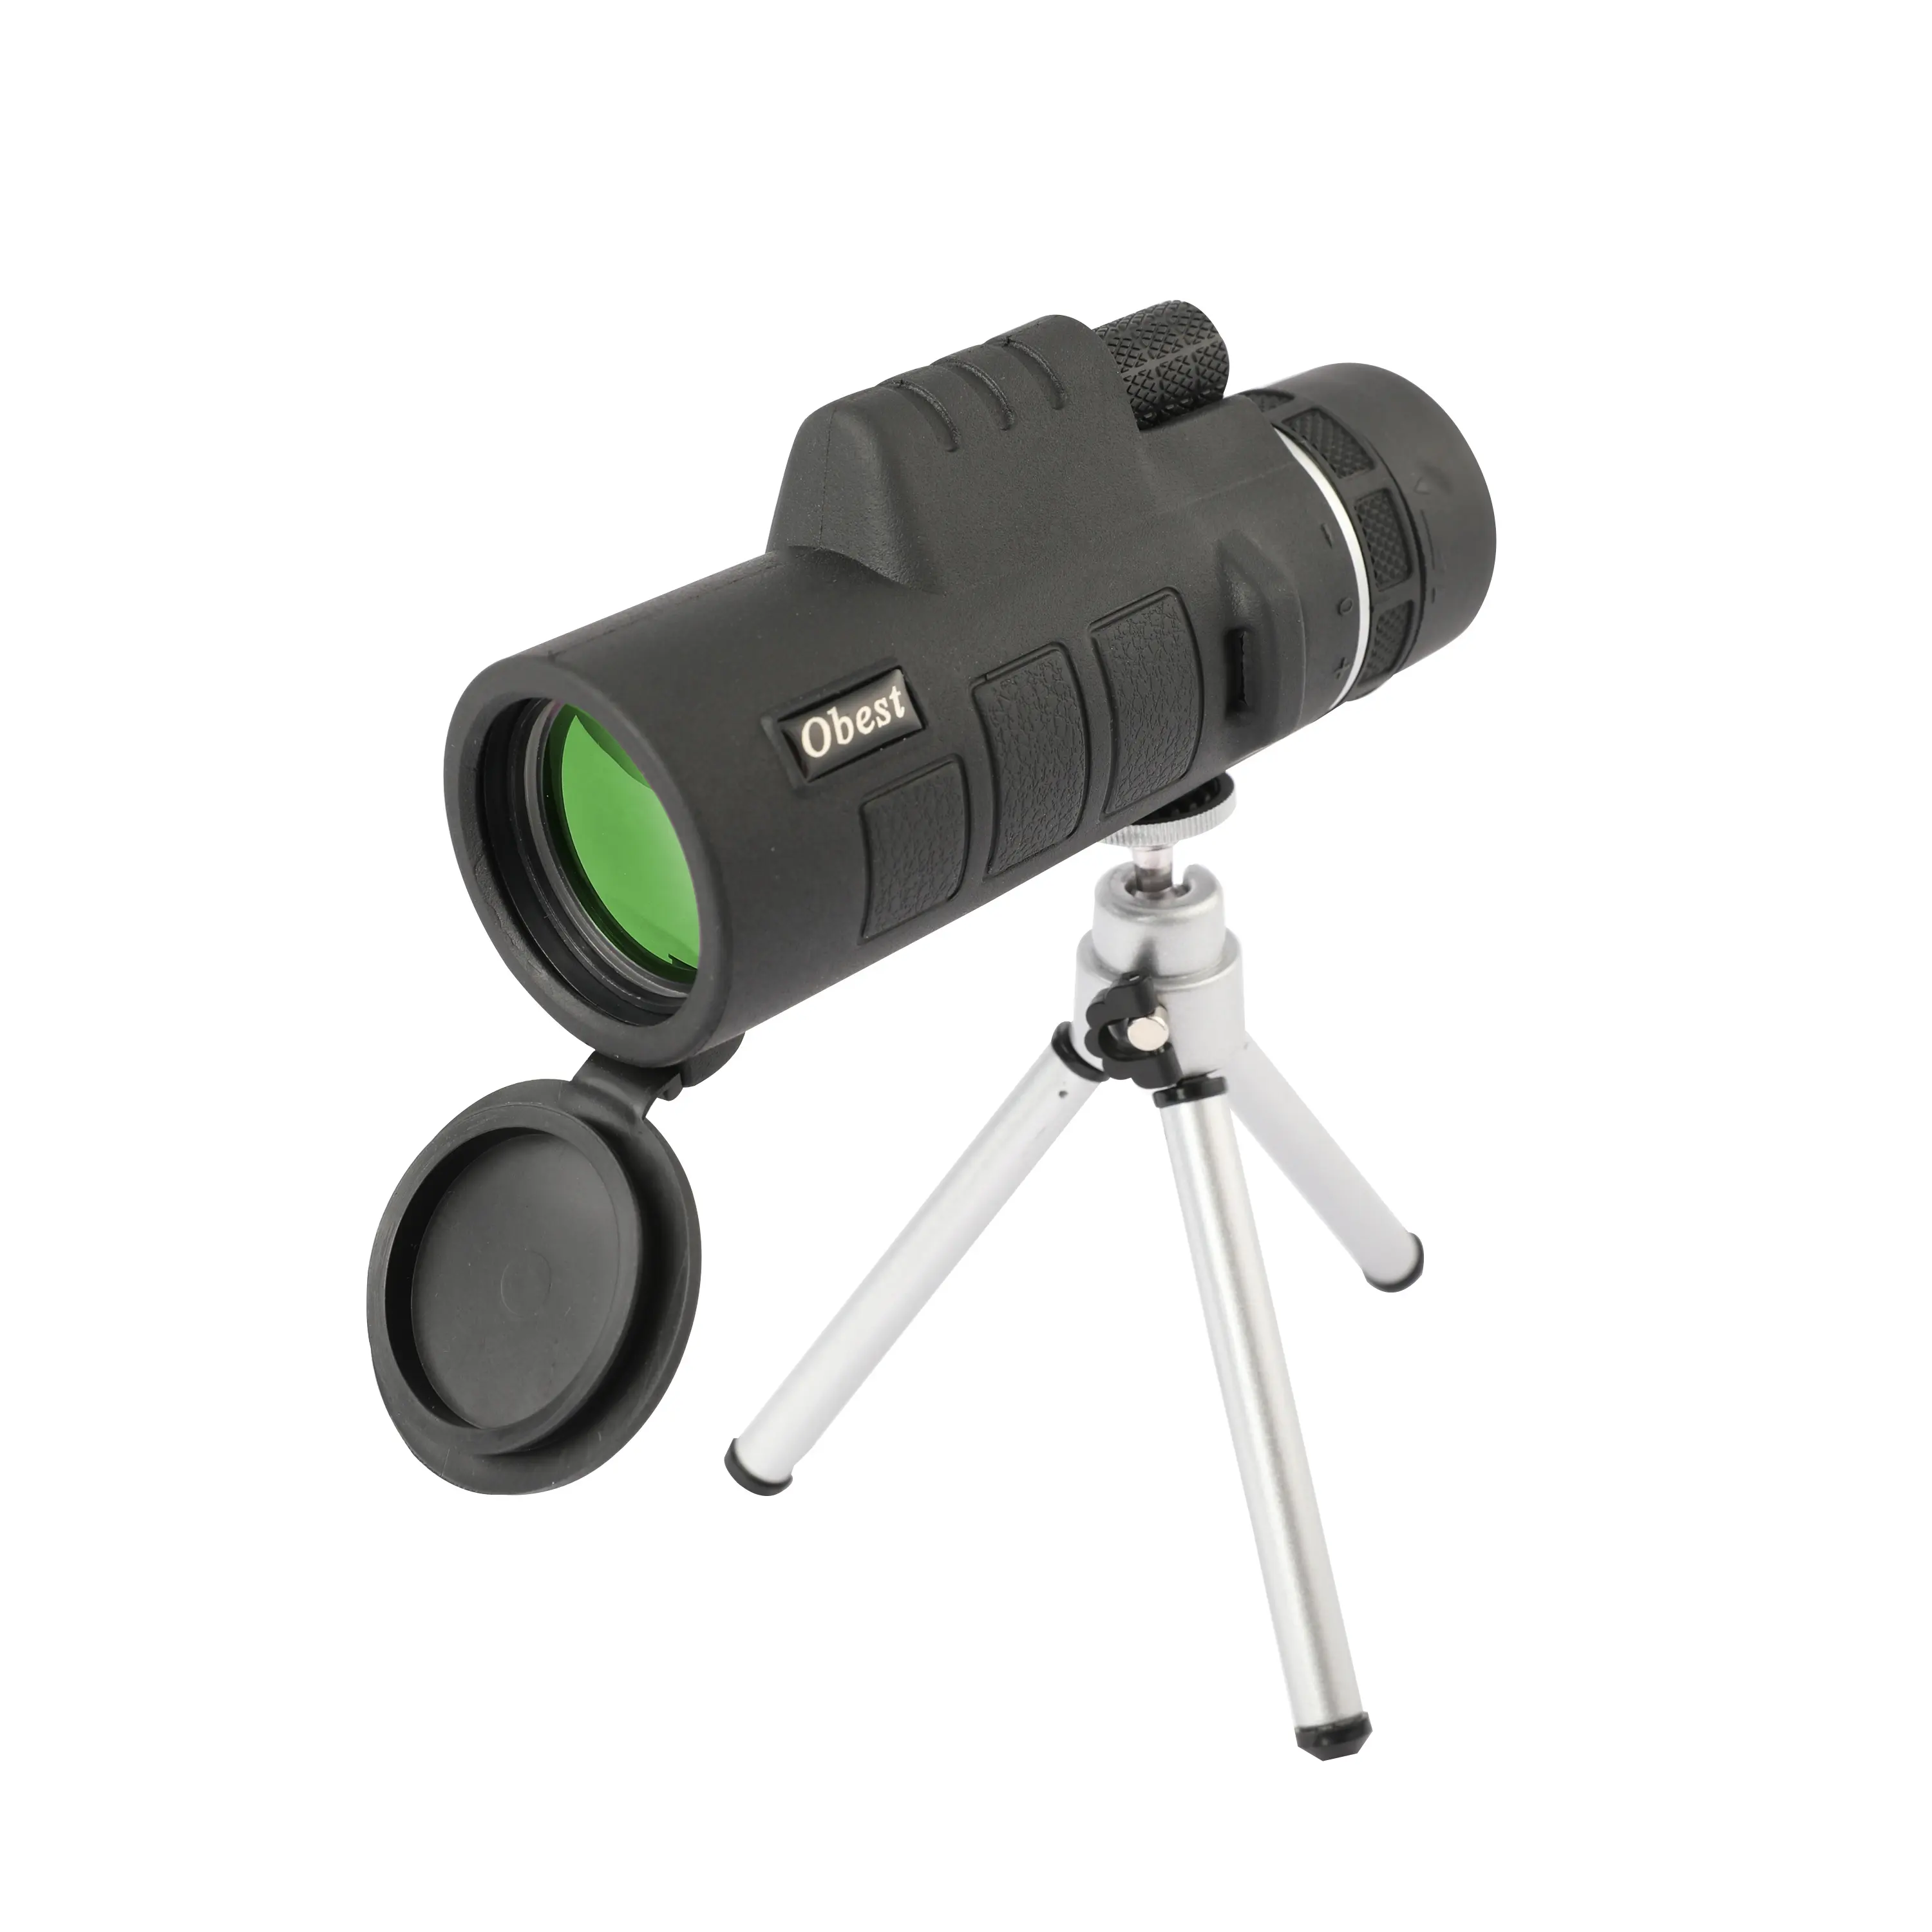 40x60 outdoor Monocular telescope grip scope high definition wide view monocular